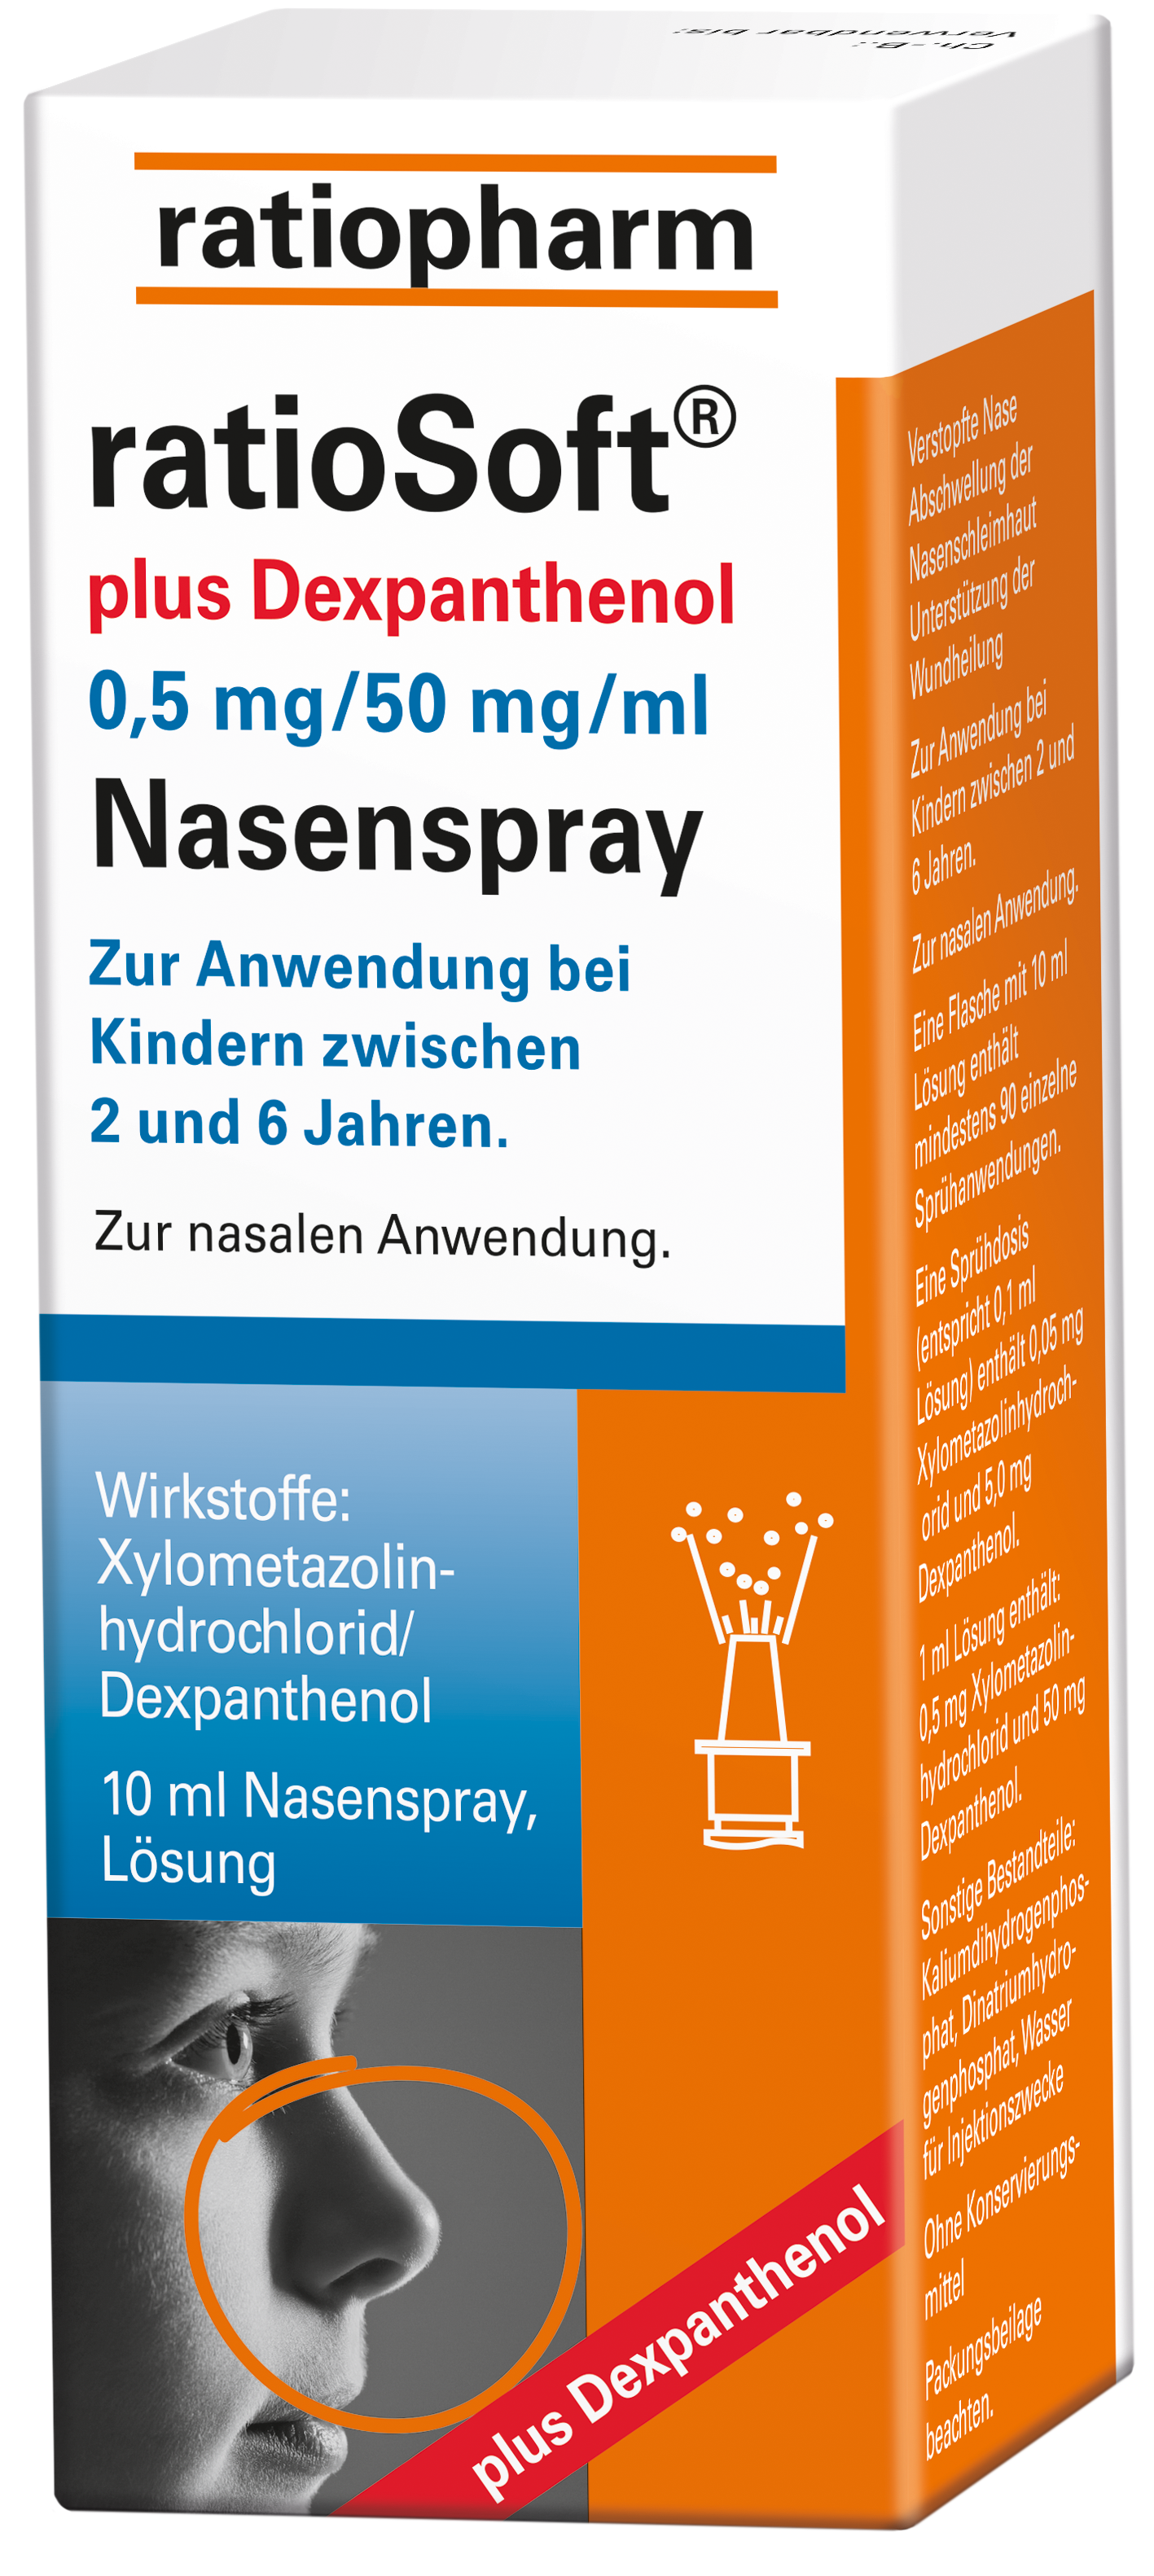 ratioSoft plus Dexpanthenol 0,5 mg/50 mg/ml - Nasenspray